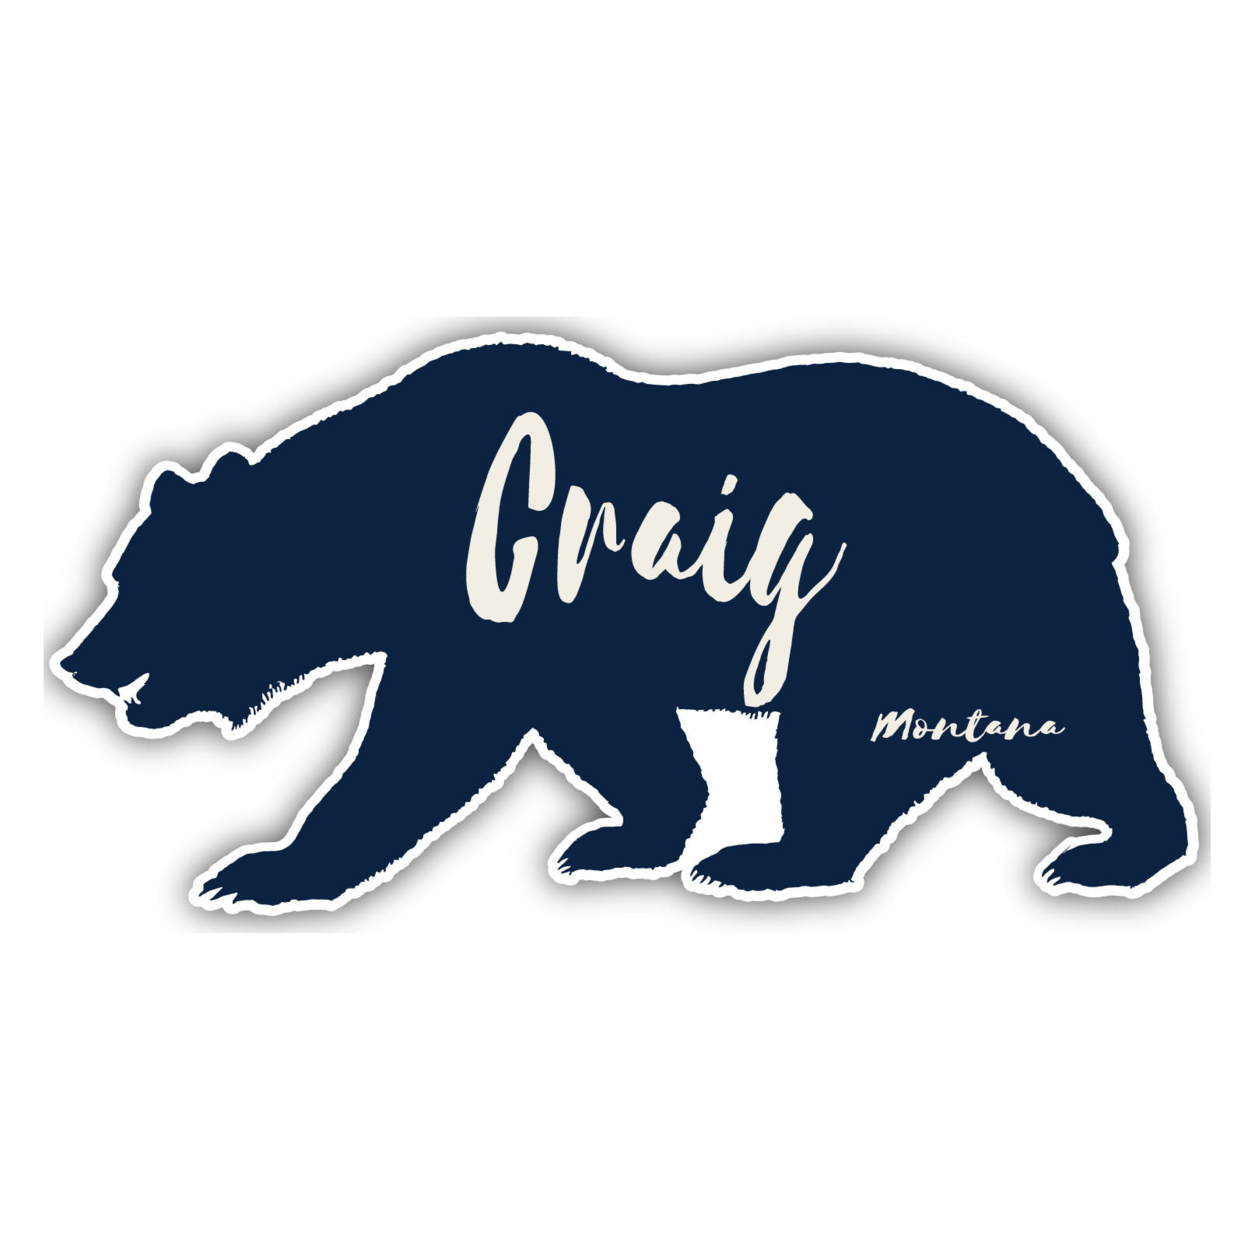 Craig Montana Souvenir Decorative Stickers (Choose Theme And Size) - 4-Pack, 6-Inch, Bear